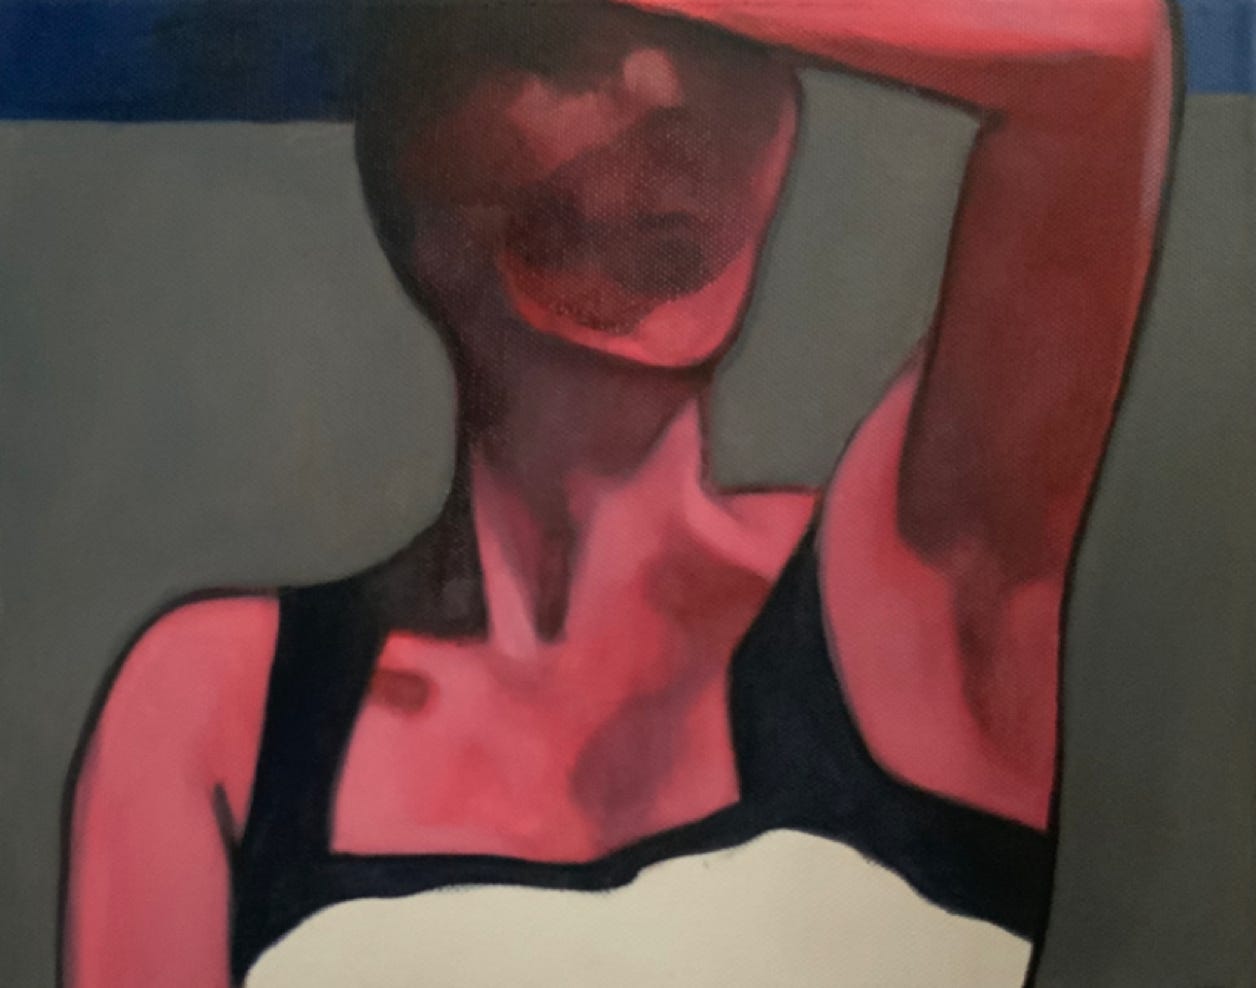 24x30 cm, oil on canvas, 2020